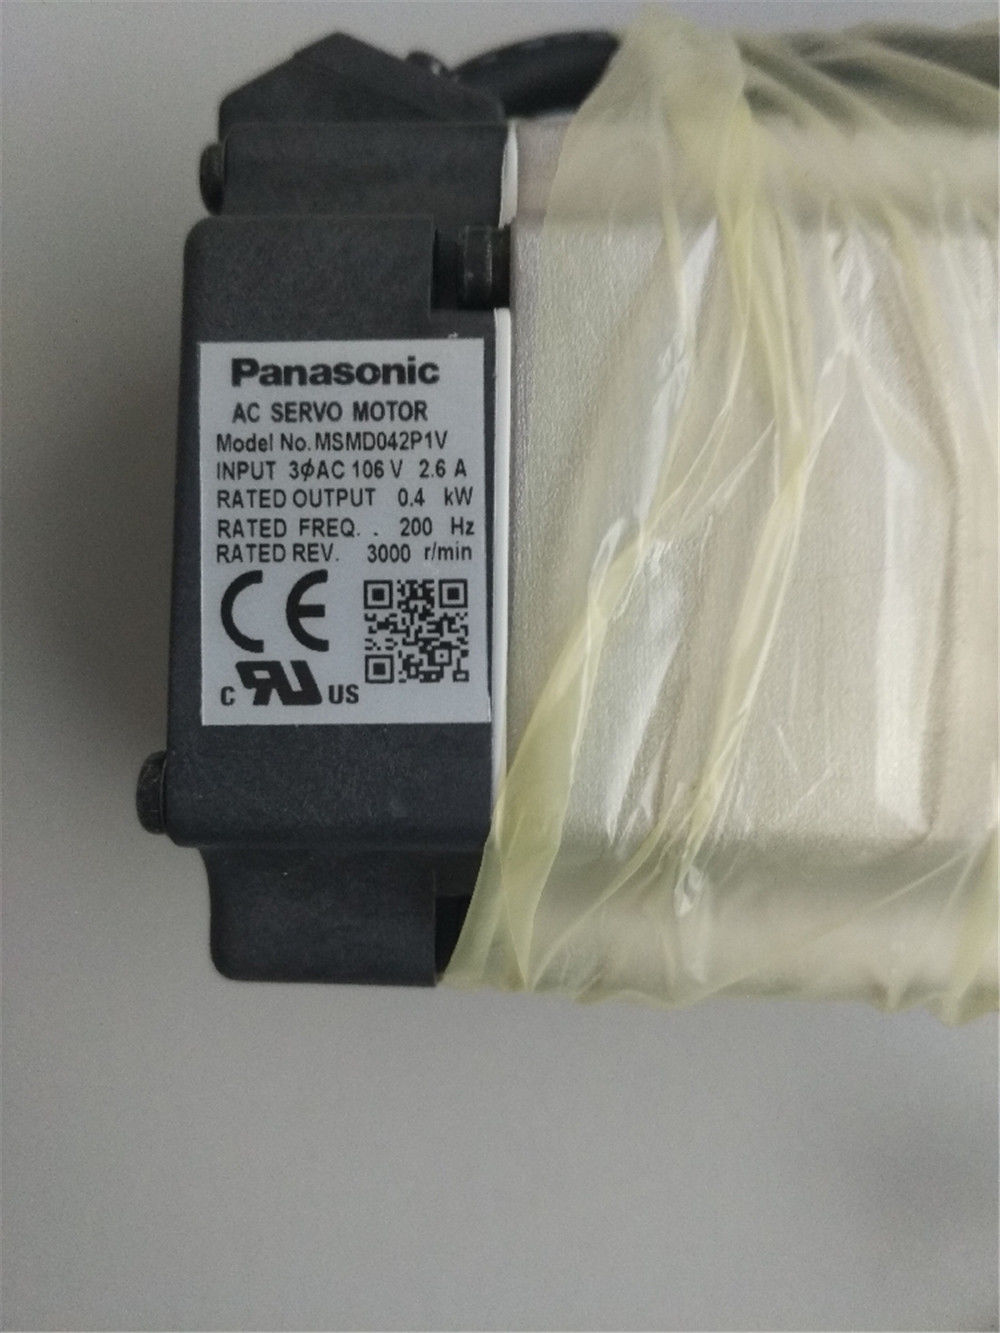 Brand NEW PANASONIC AC Servo motor MSMD042P1V in box - zum Schließen ins Bild klicken